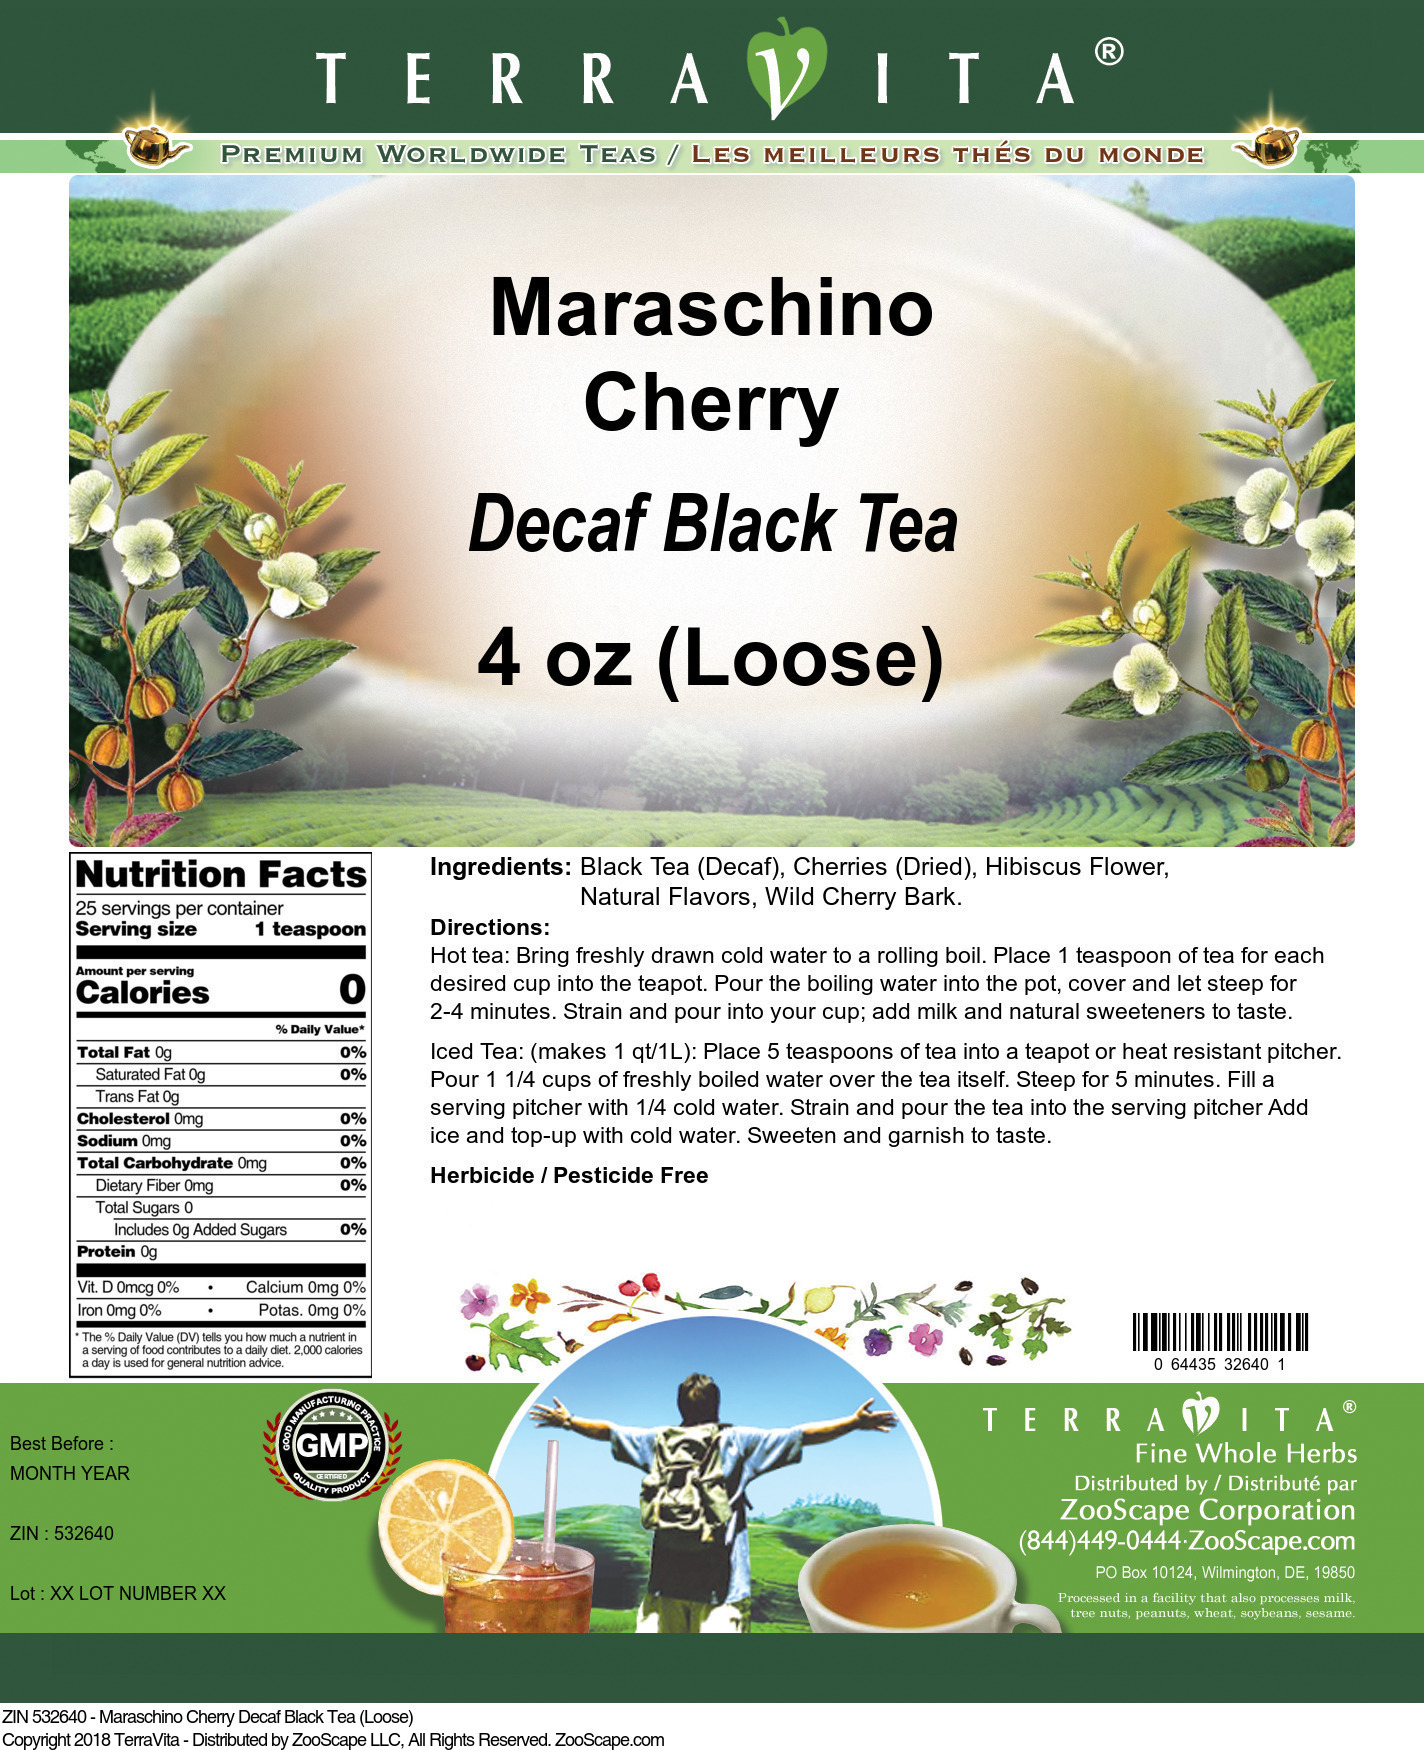 Maraschino Cherry Decaf Black Tea (Loose) - Label